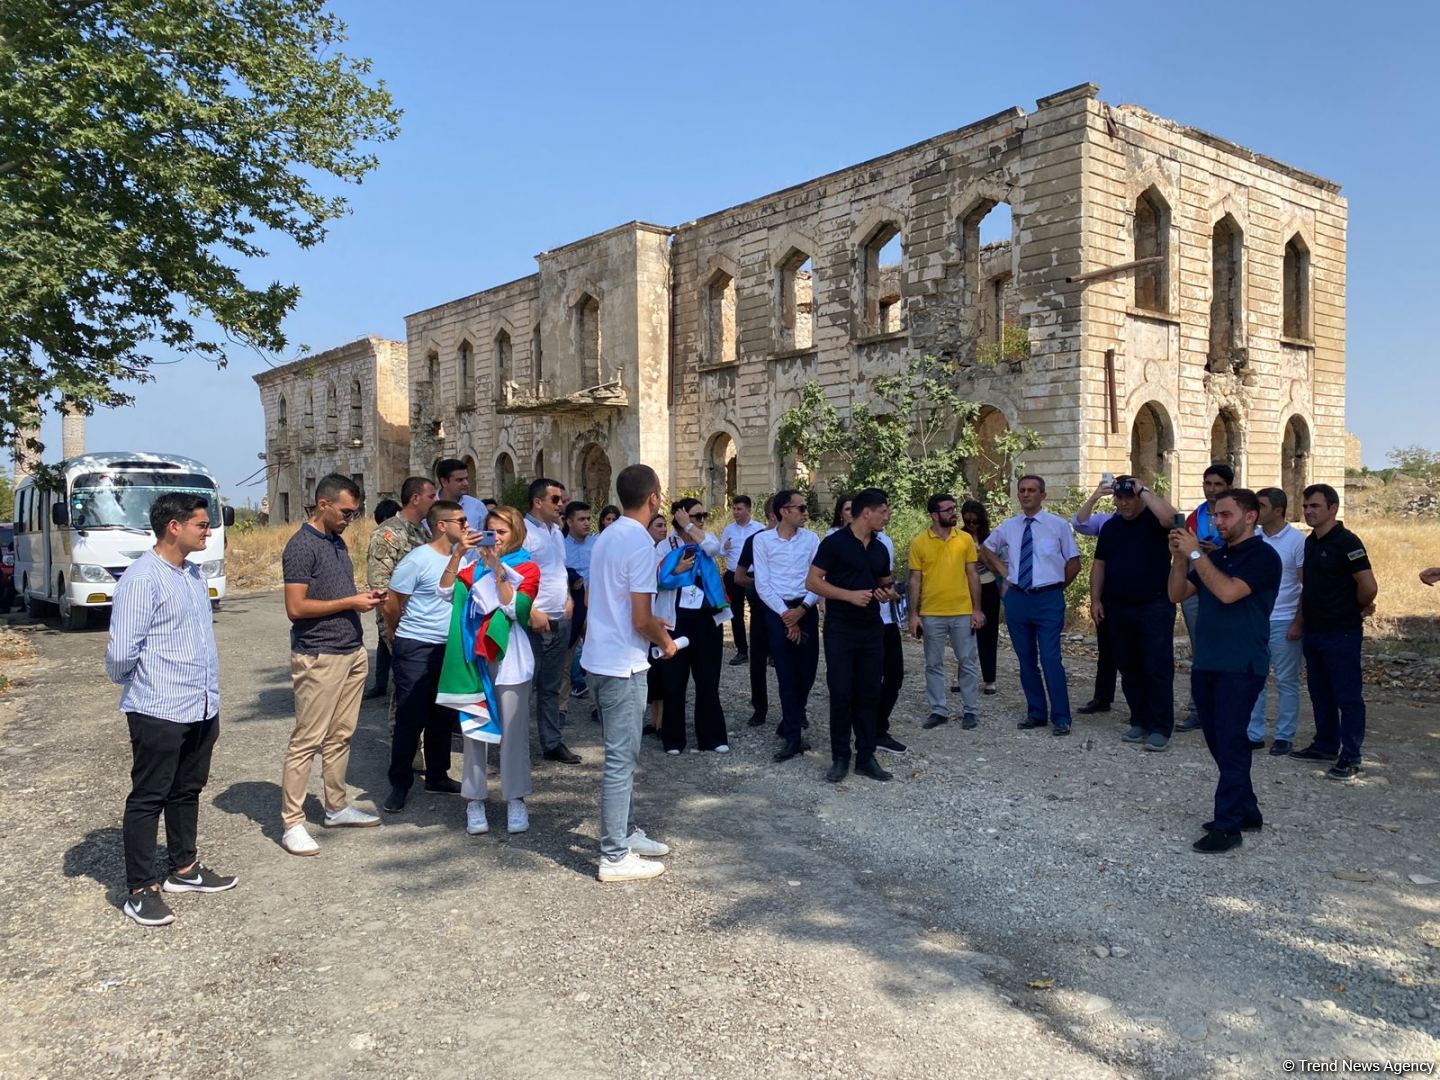 Reps of Azerbaijan's leading youth organizations visit liberated Aghdam (PHOTO)